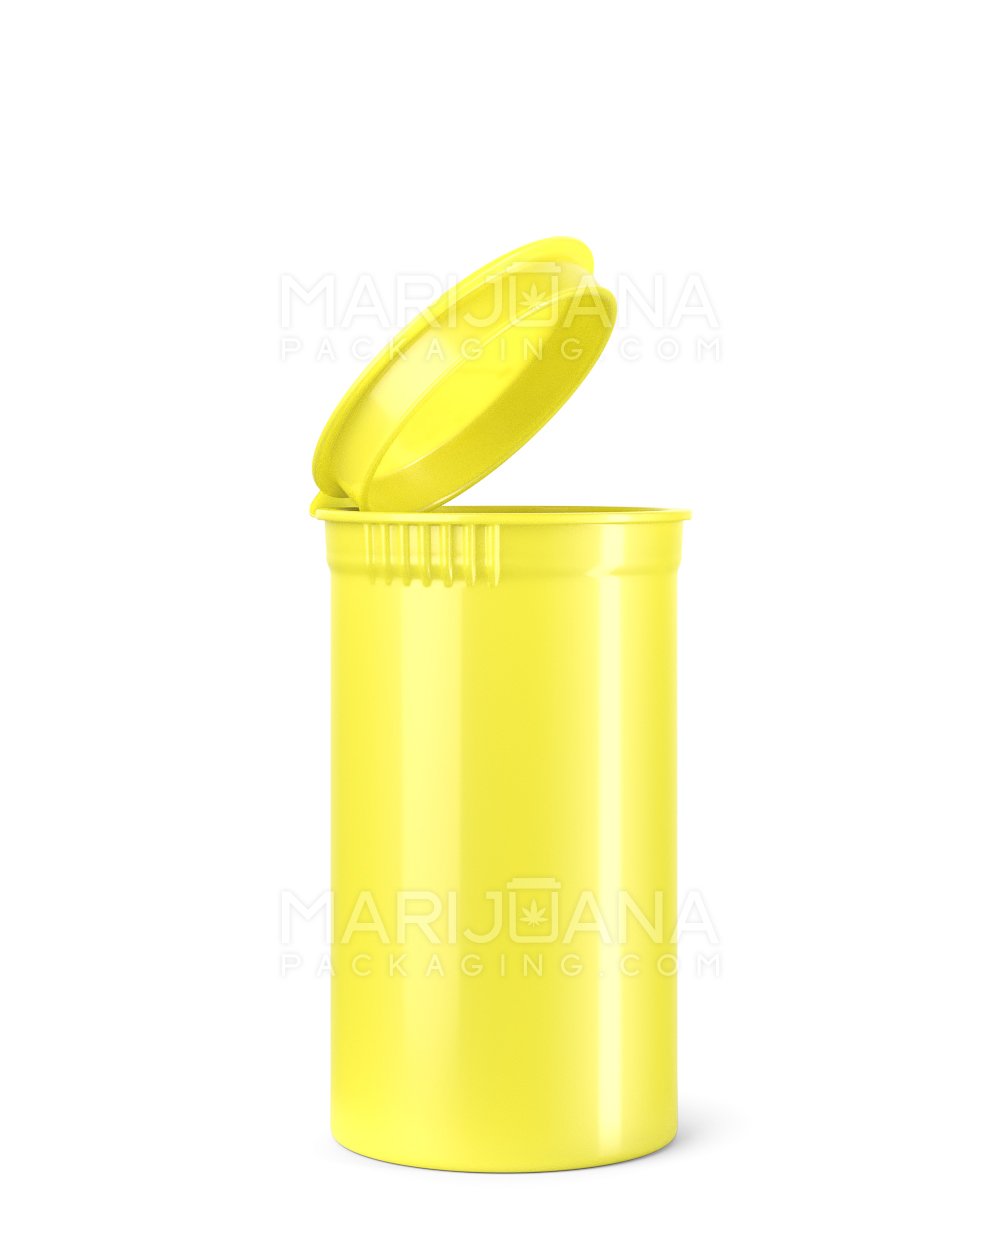 Child Resistant Opaque Lemon Pop Top Bottles | 19dr - 3.5g | Sample - 1